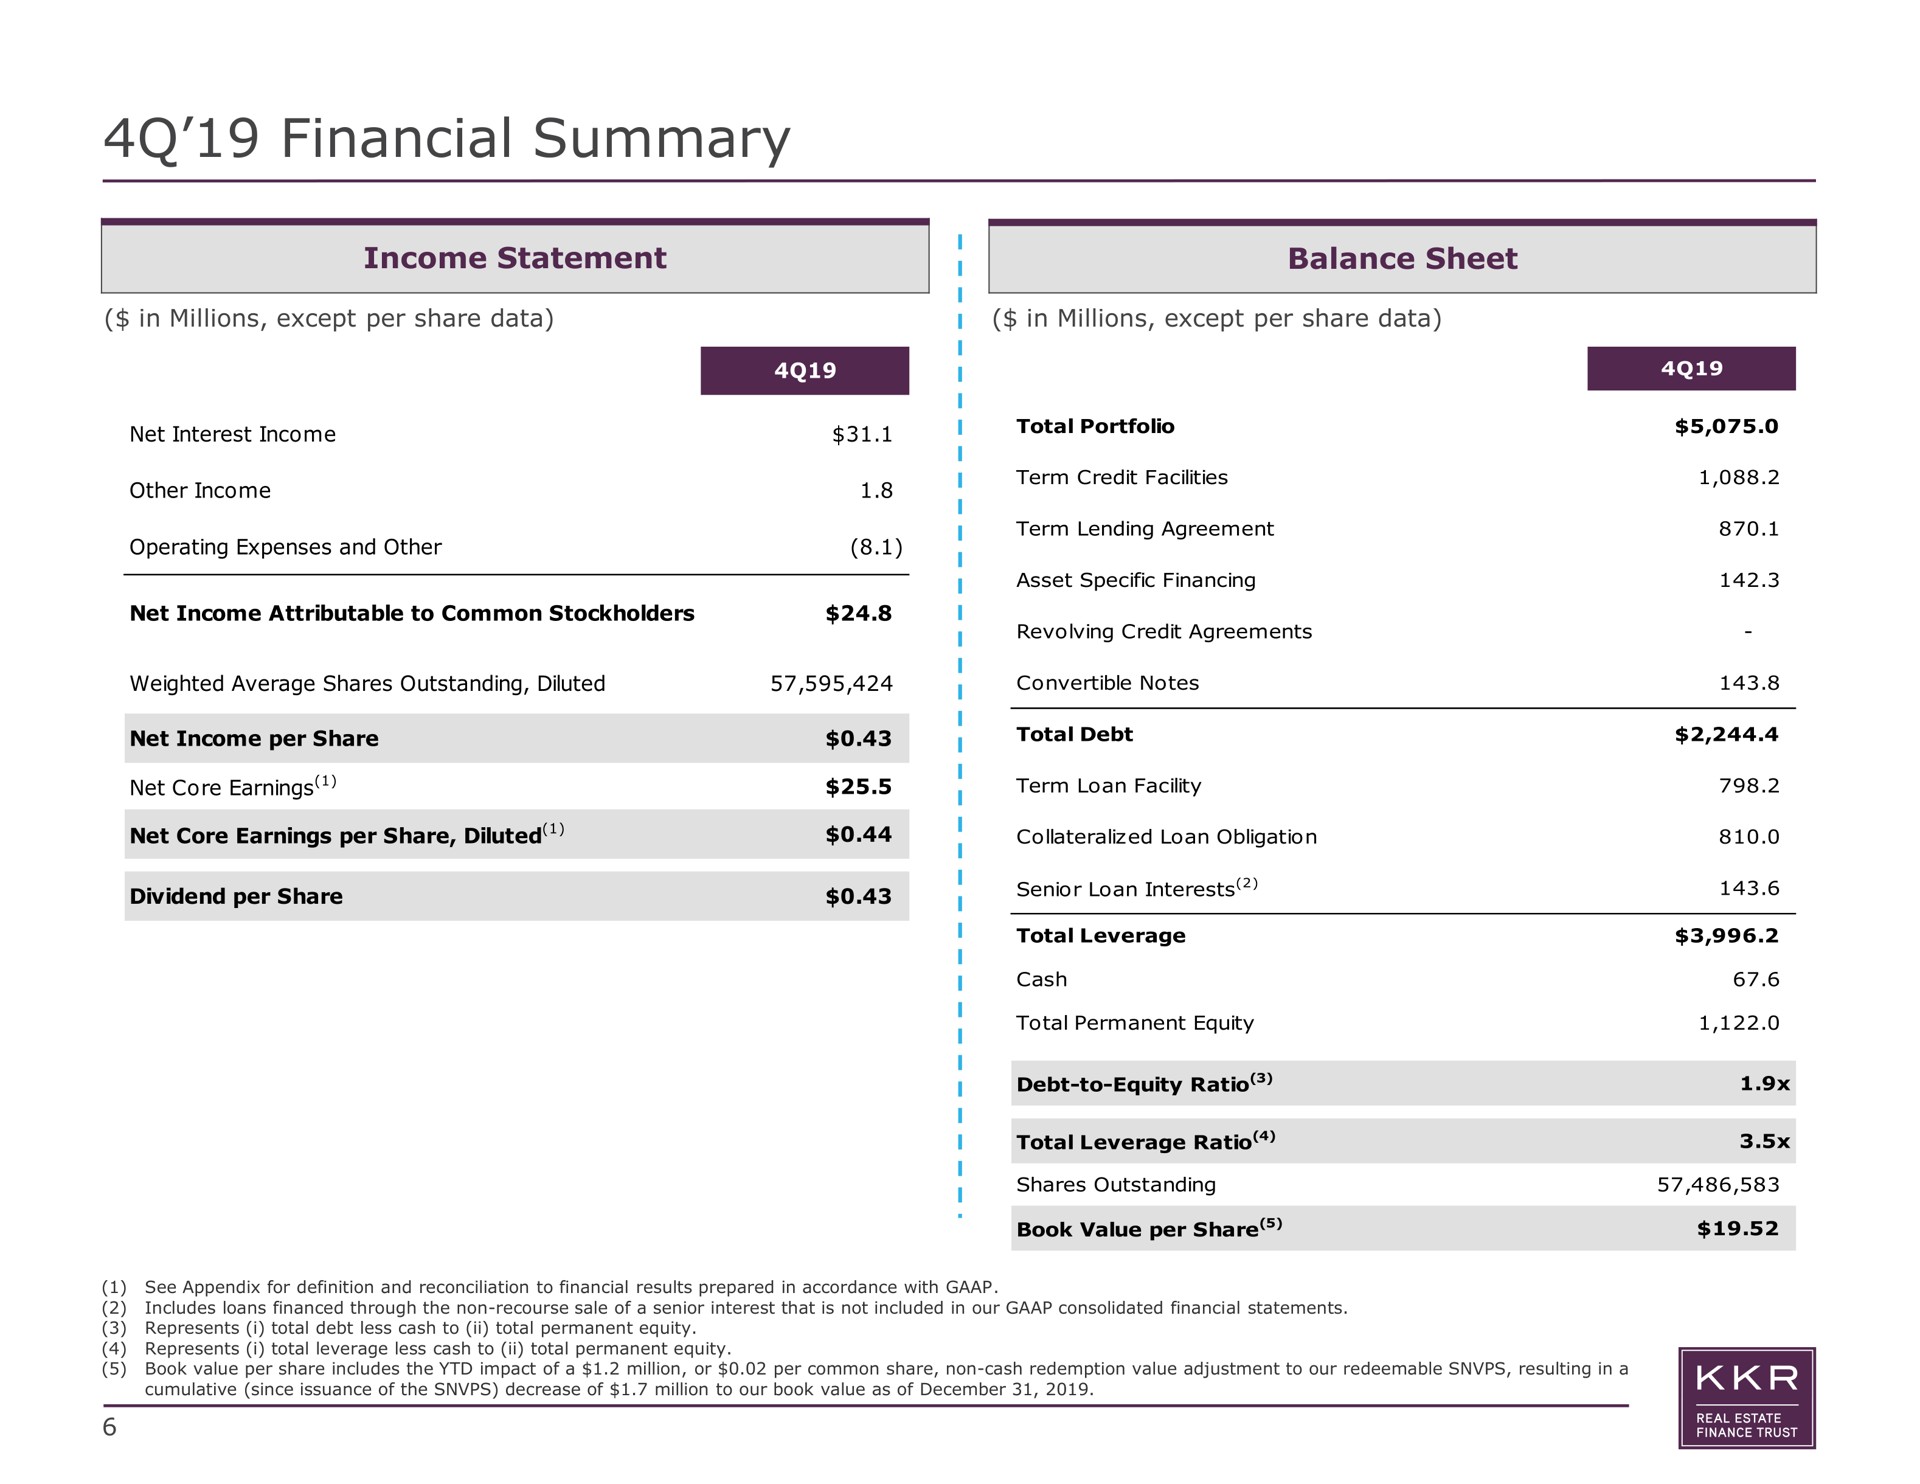 financial summary net interest income fetal portfolio | KKR Real Estate Finance Trust